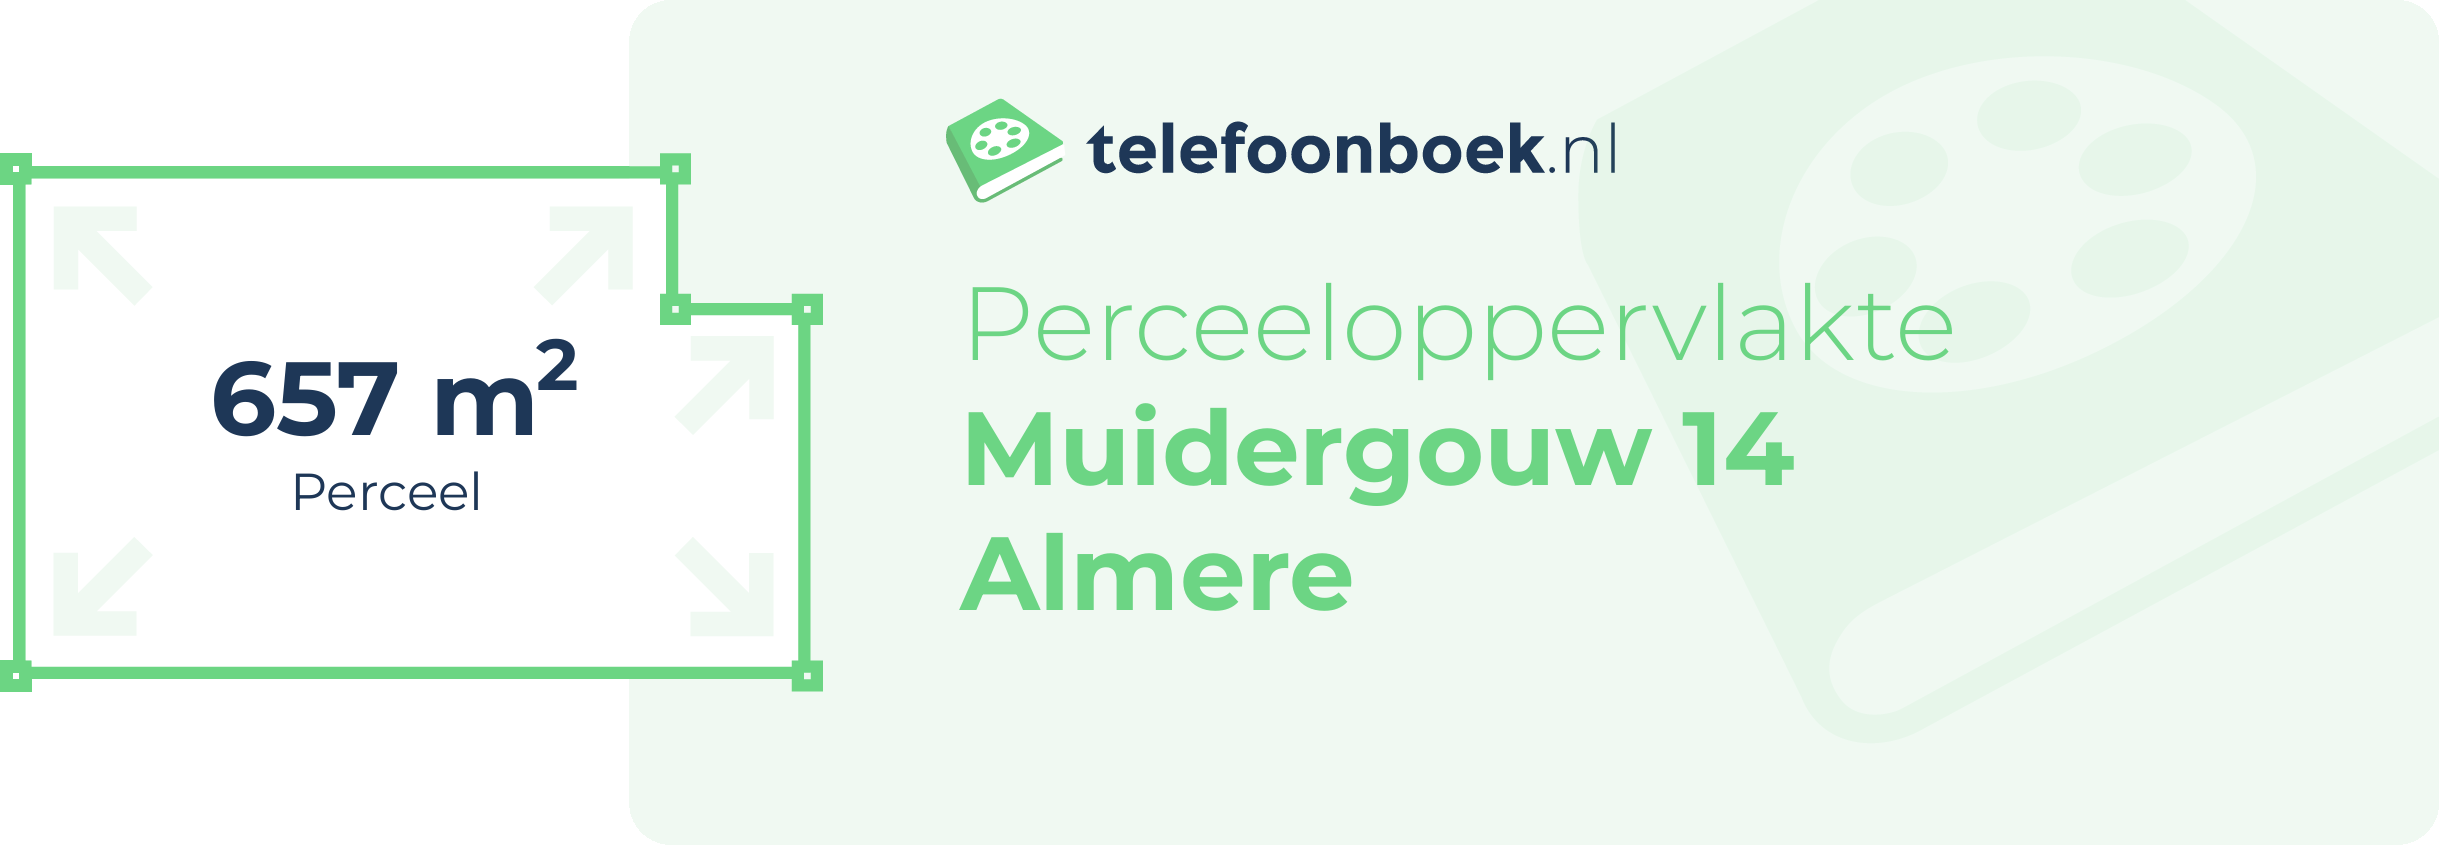 Perceeloppervlakte Muidergouw 14 Almere